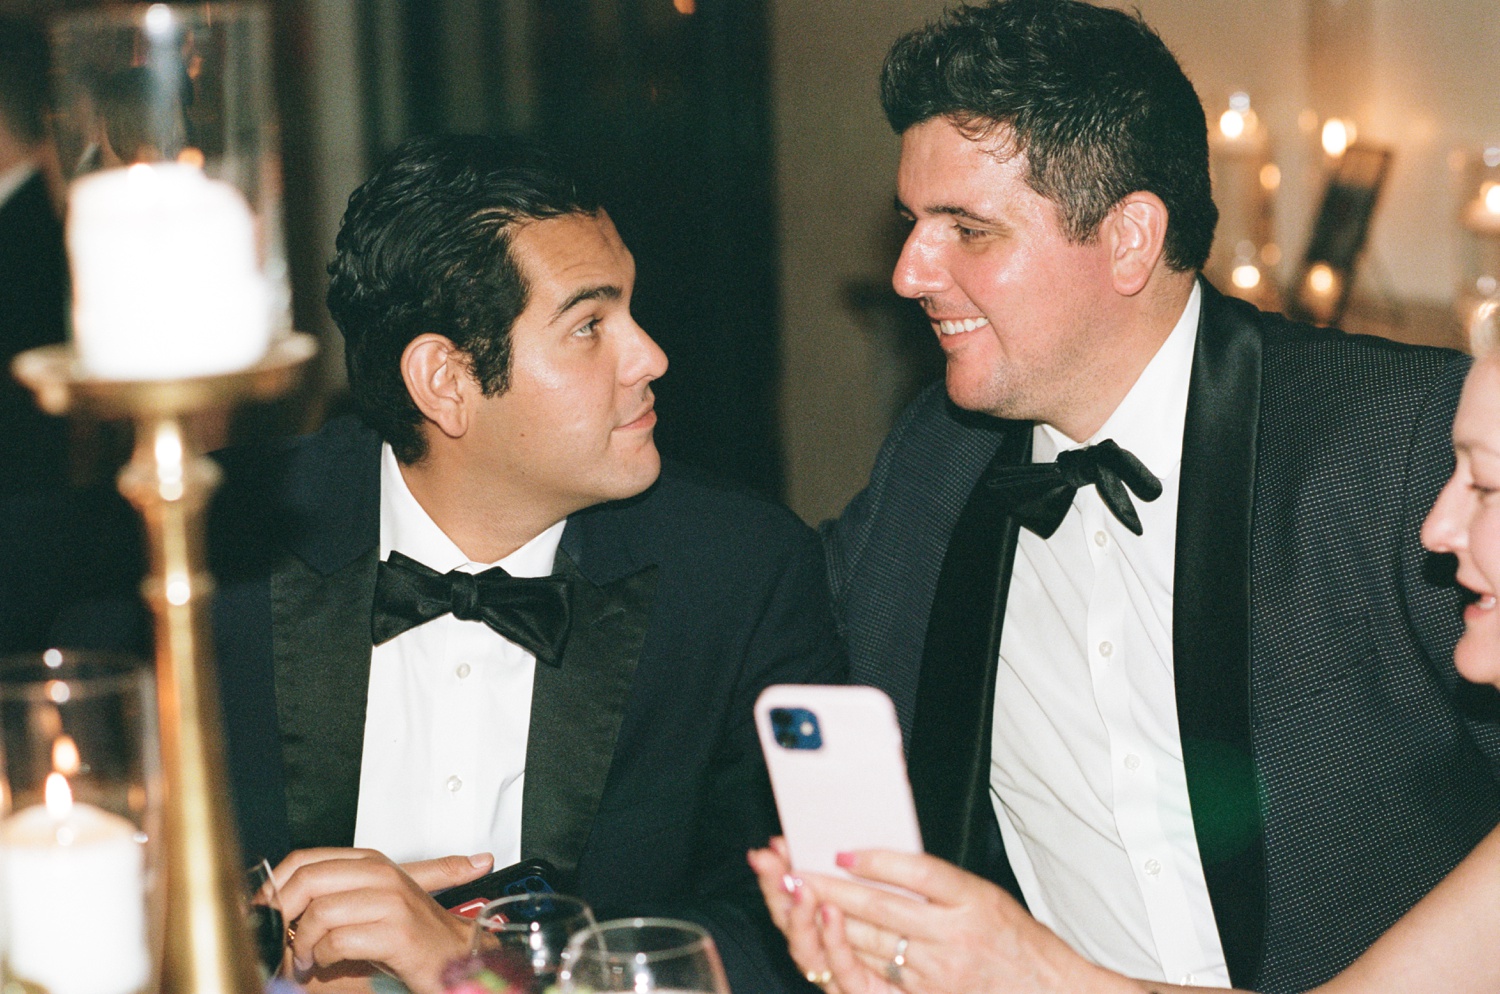 Two men in tuxes sit talking at a Philadelphia wedding reception.